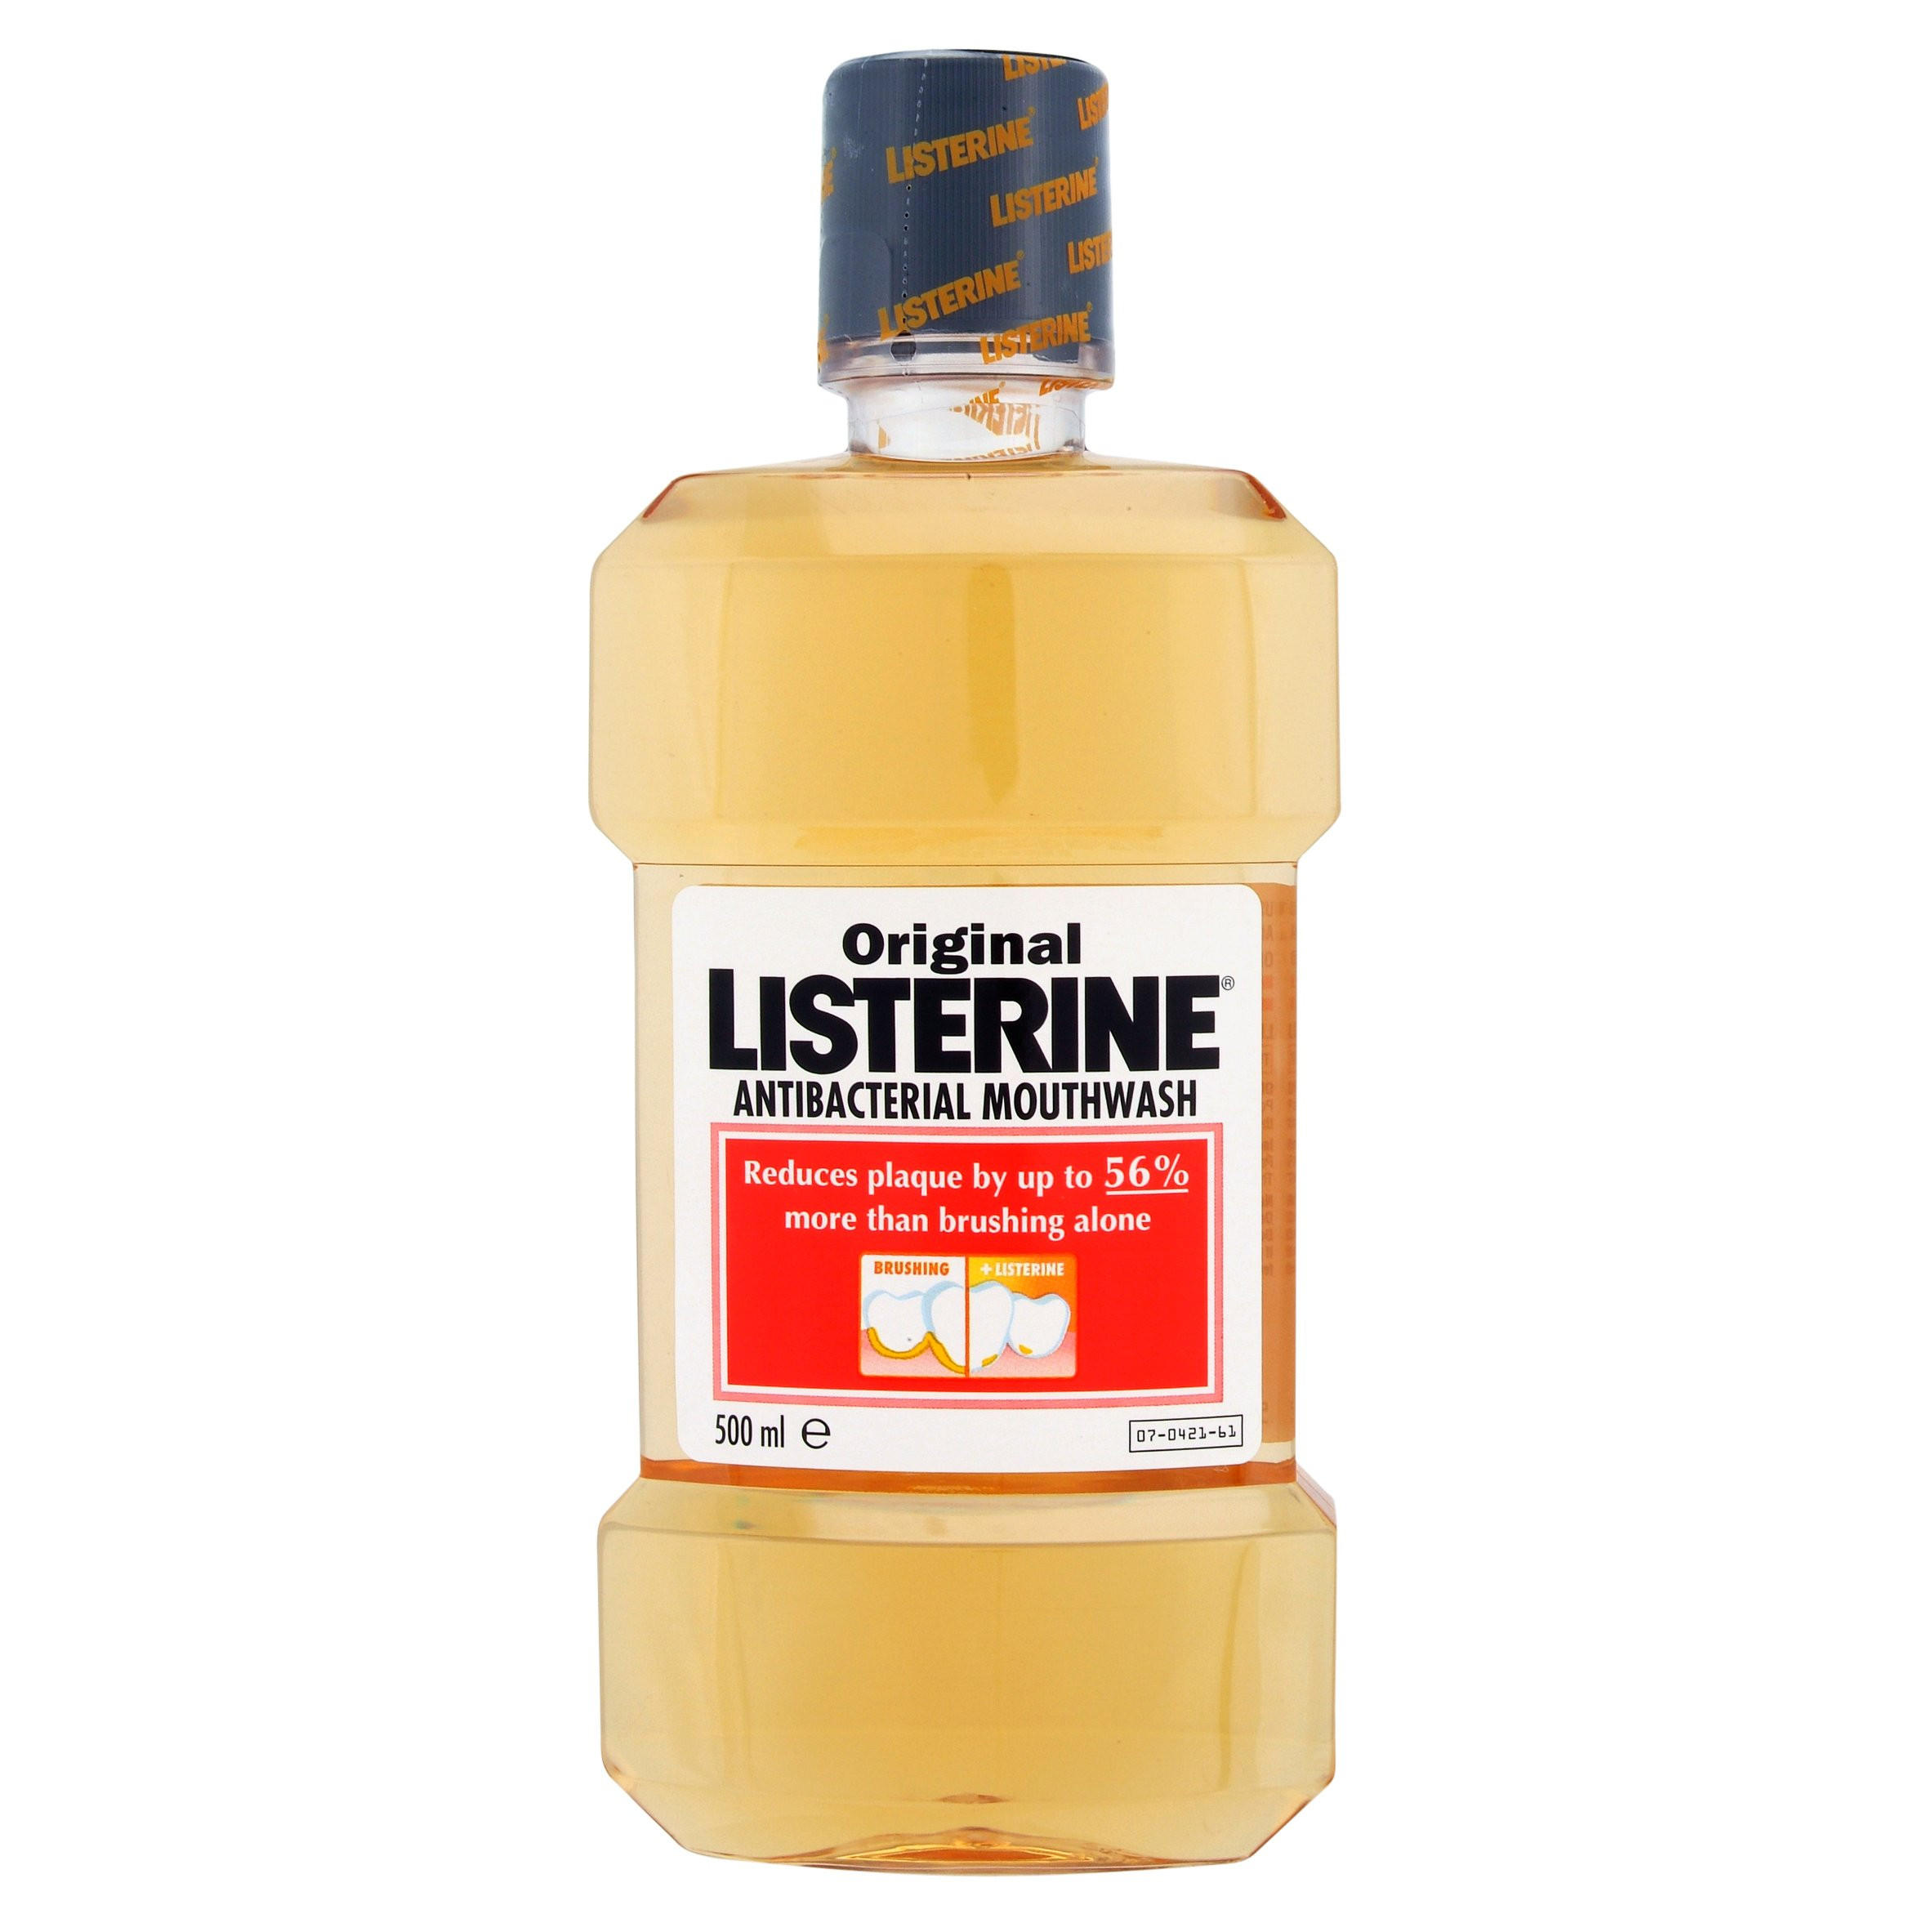 listerine-original-antibacterial-mouthwash-500ml-dental-care